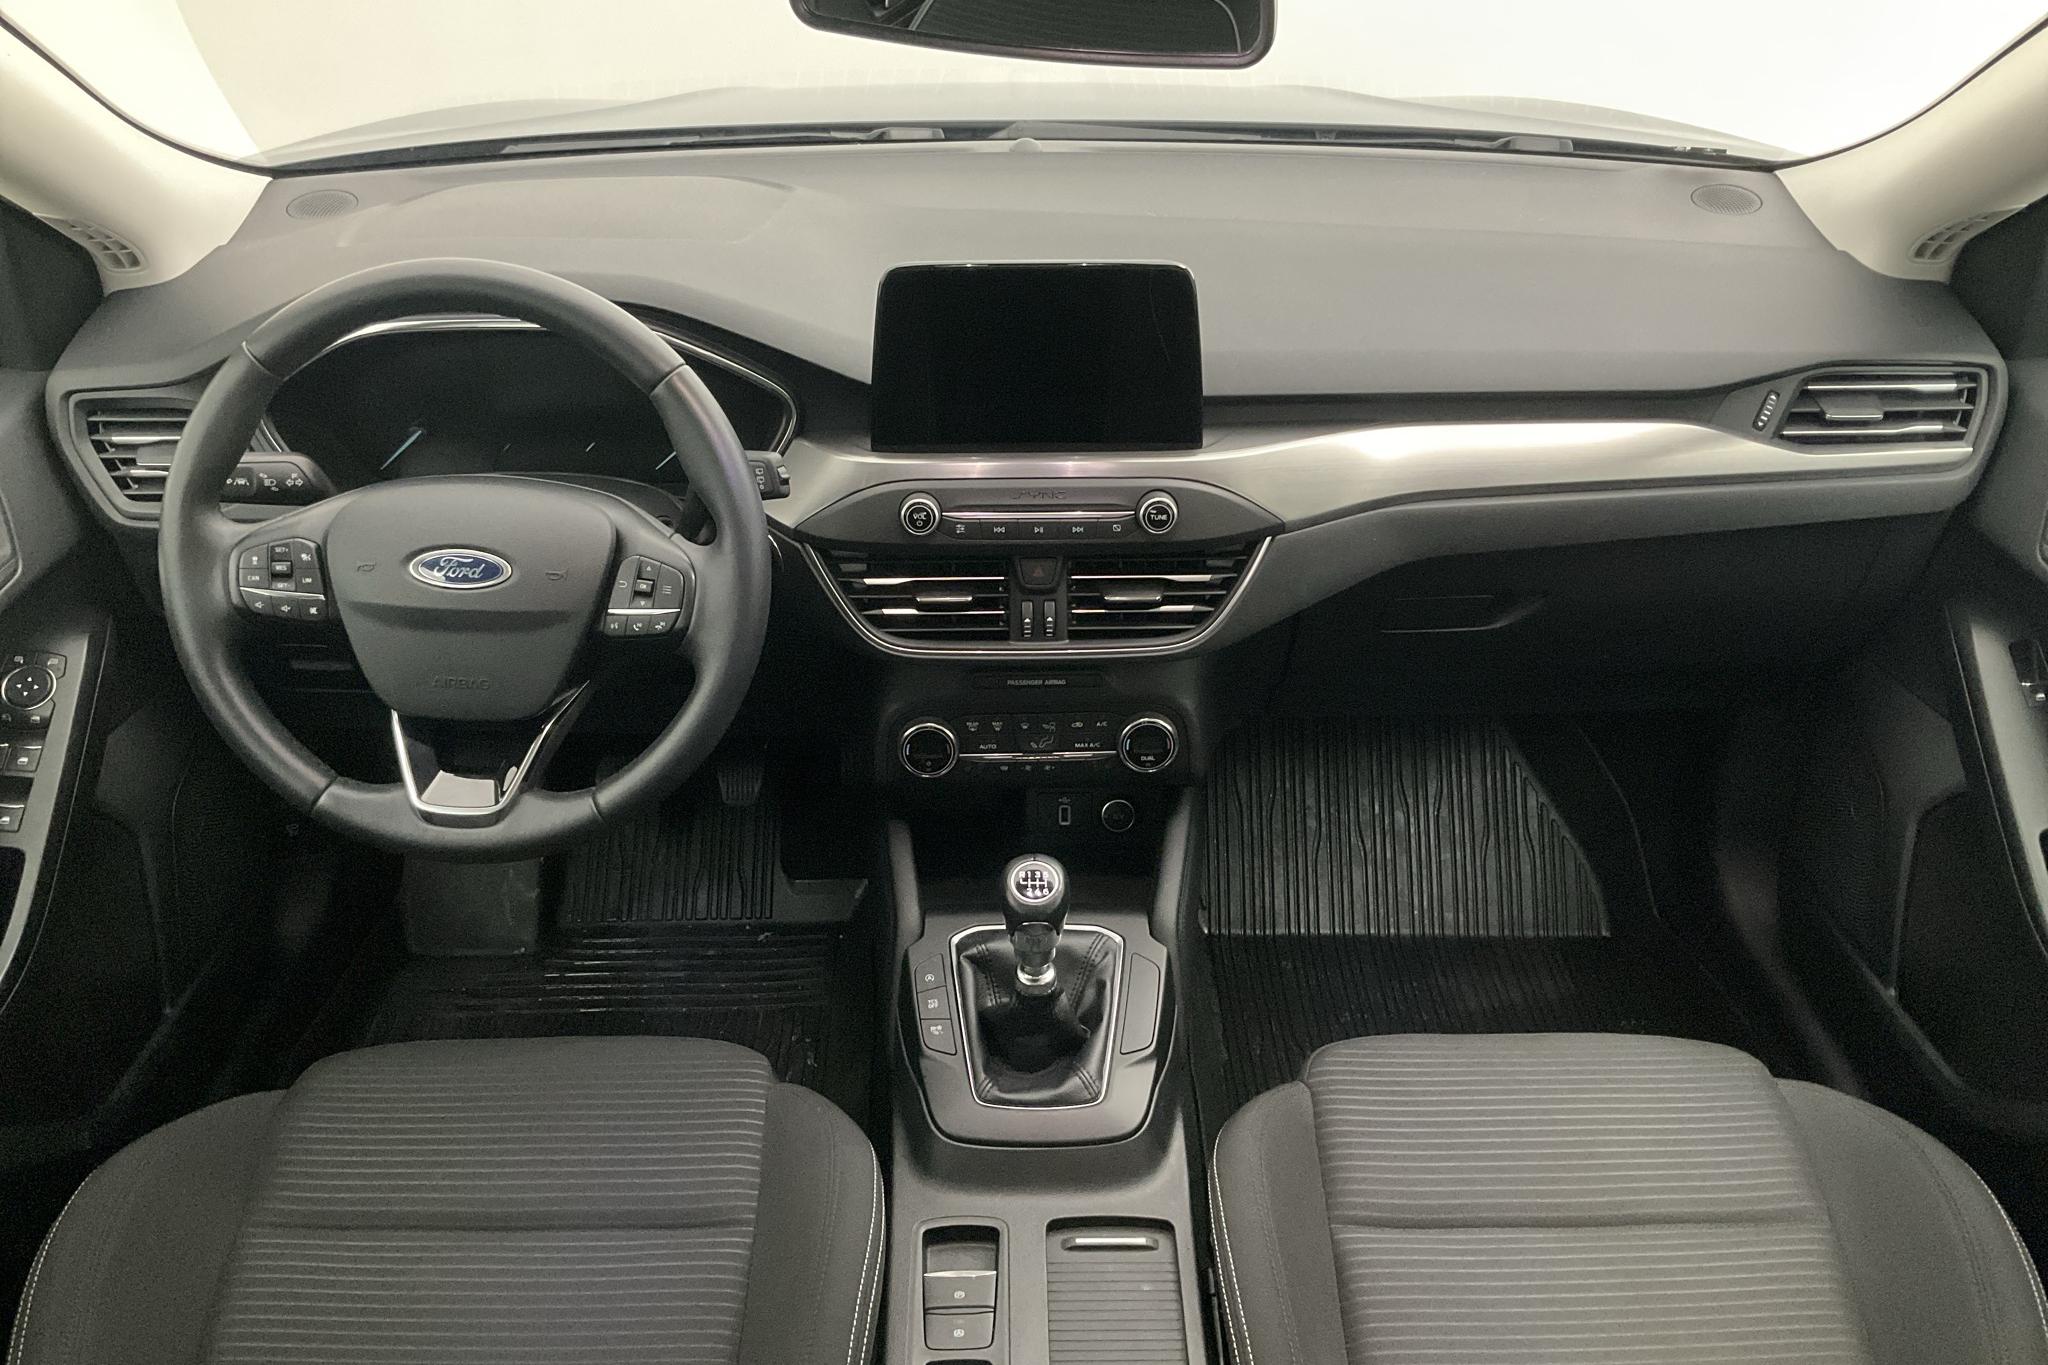 Ford Focus 1.5 TDCi Kombi (120hk) - 6 673 mil - Manuell - blå - 2019